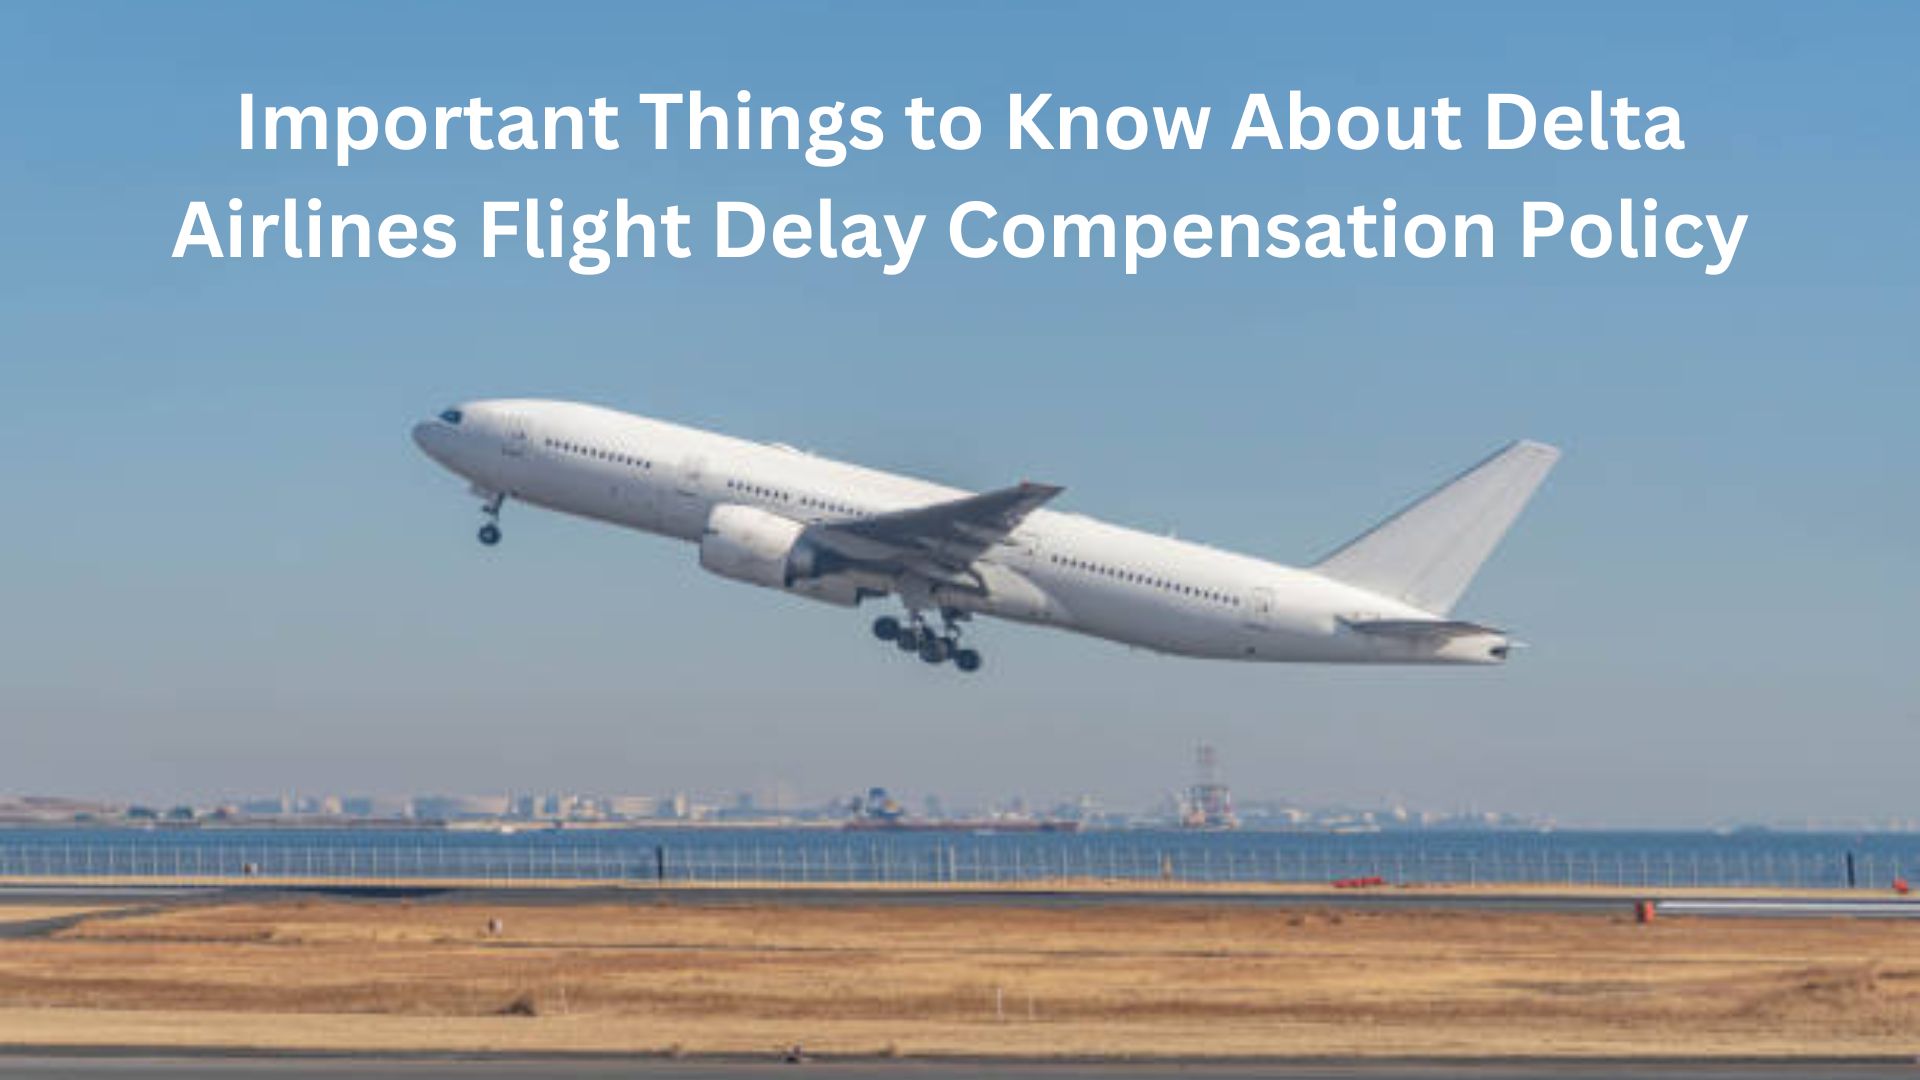 Delta Airlines Flight Delay Compensation Policy